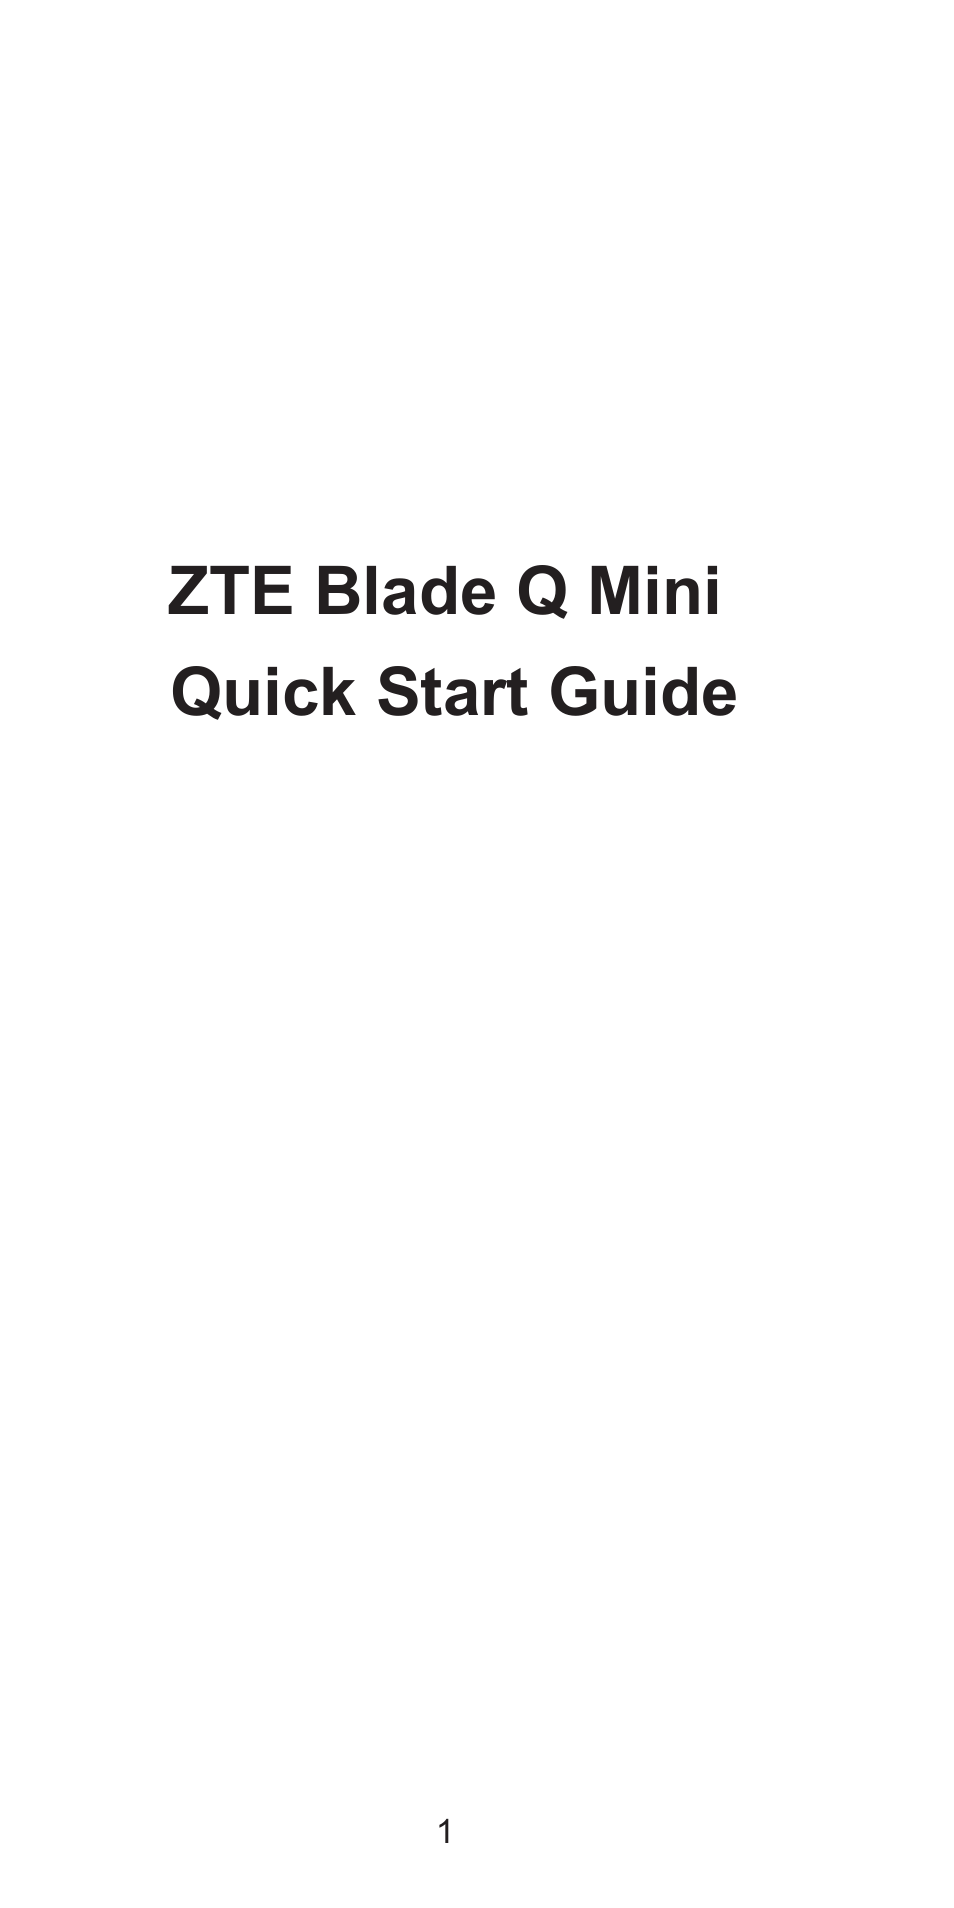 Blade Q Mini